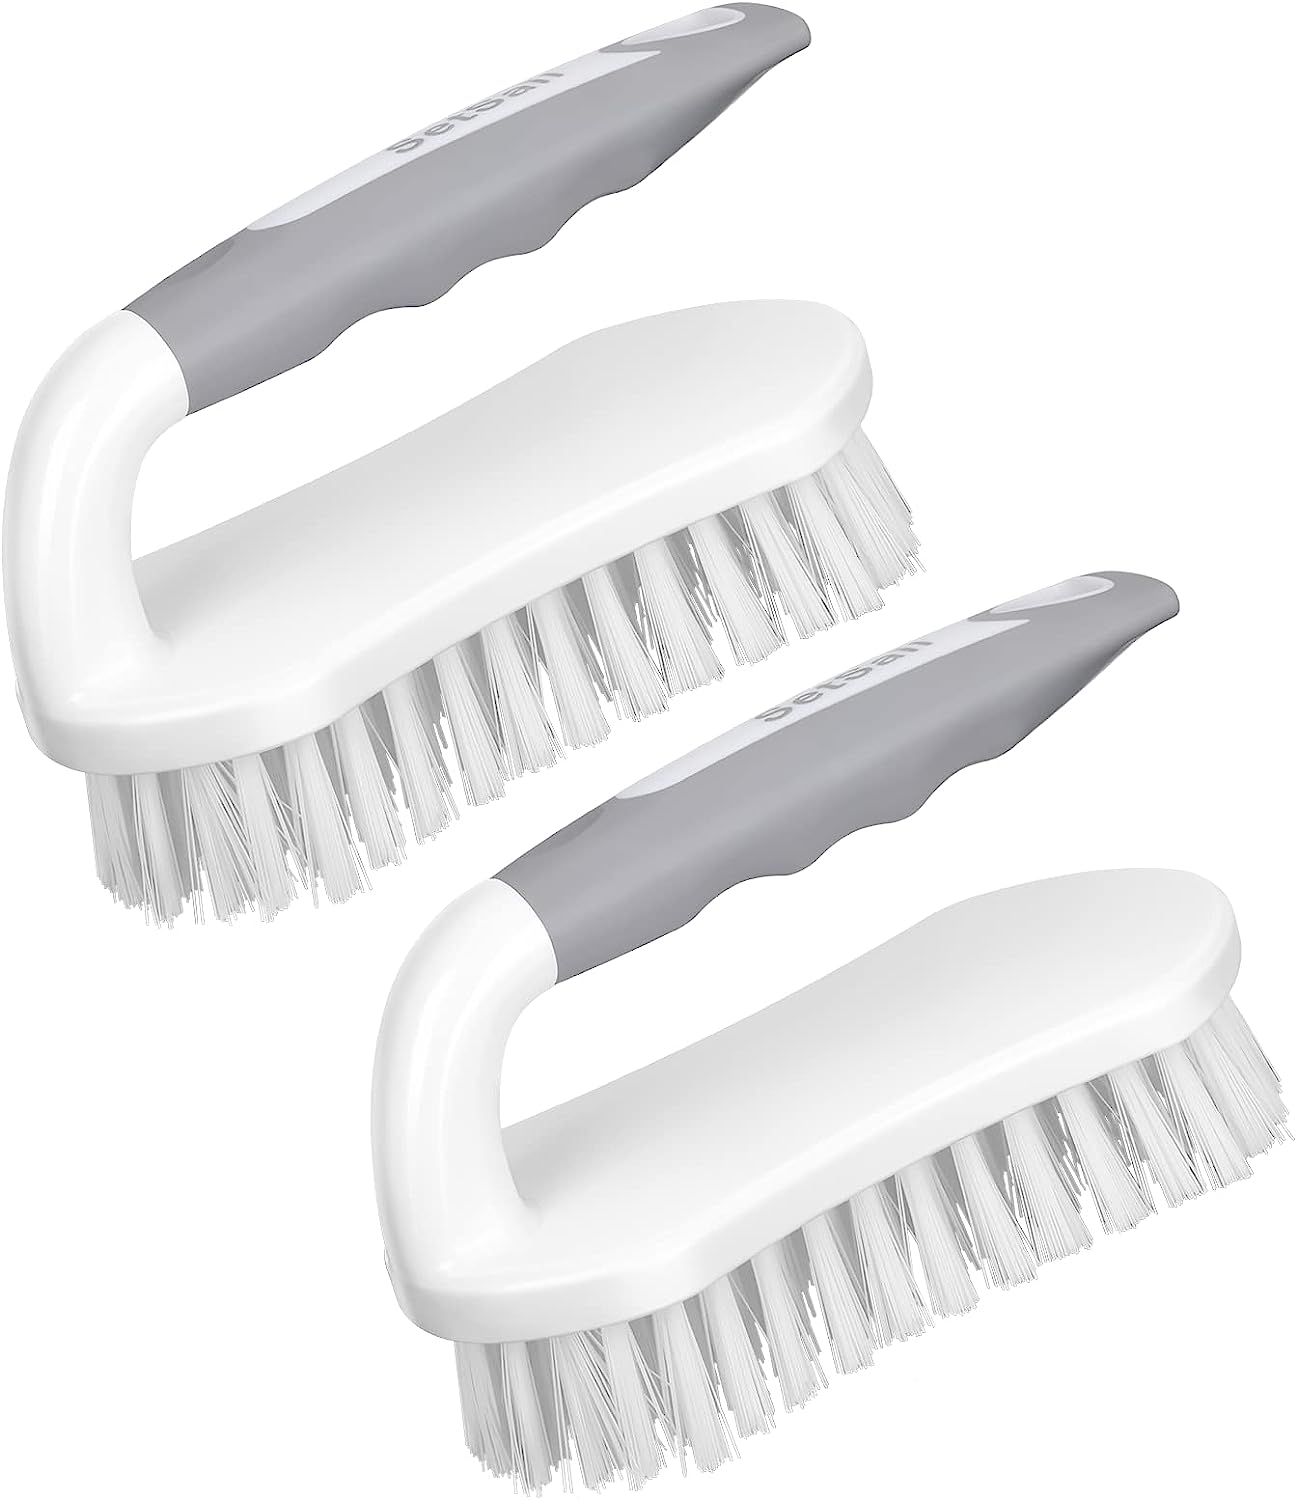 SetSail Scrub Brush, Heavy-Duty Scrub Brushes for [...]